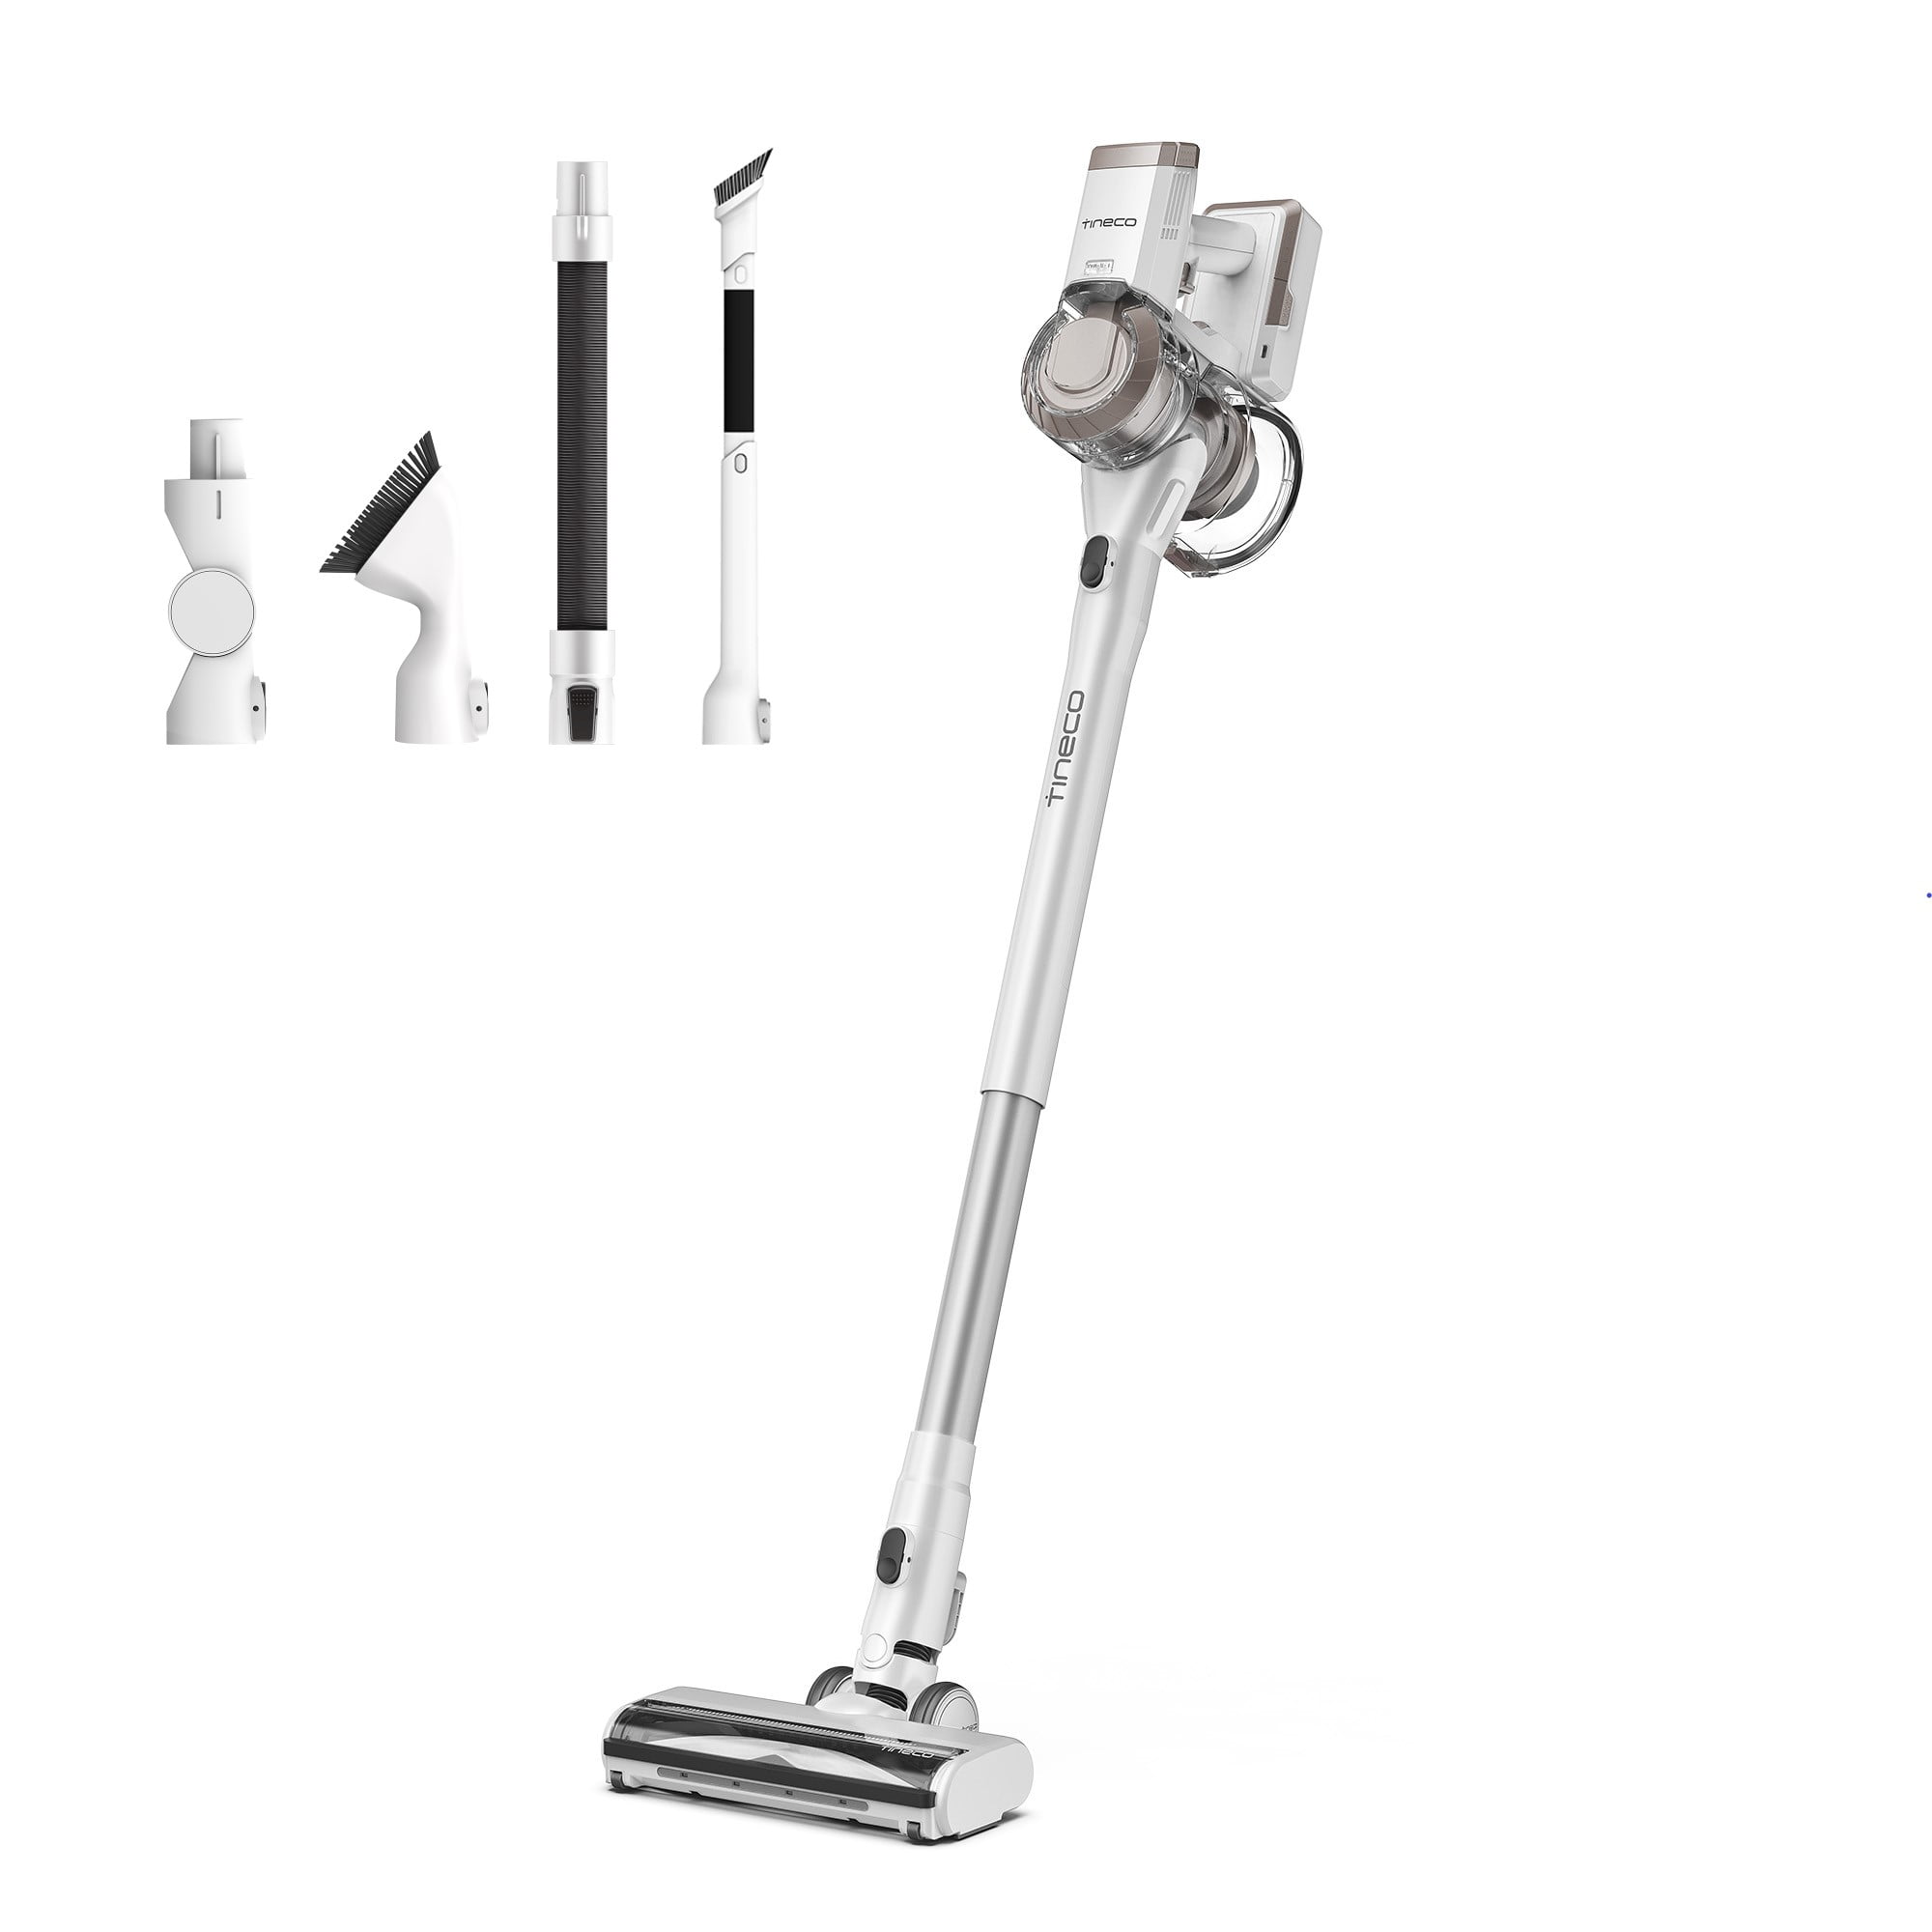 Tineco Pwrhero 11 ZT Cordless Stick Vacuum Cleaner with